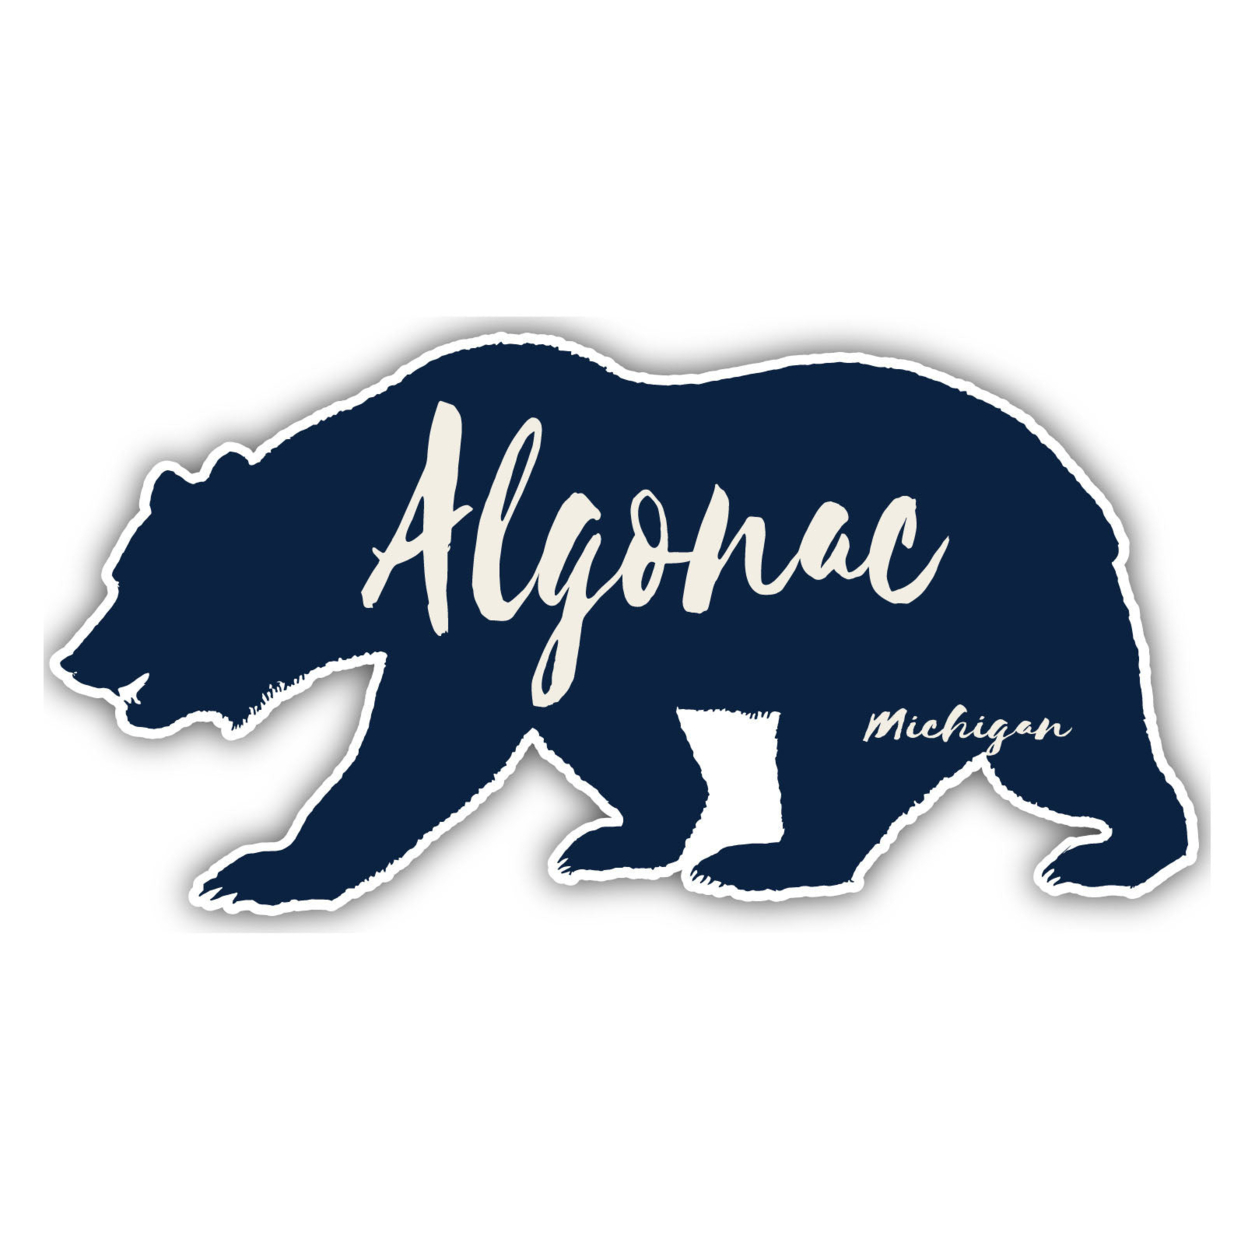 Algonac Michigan Souvenir Decorative Stickers (Choose Theme And Size) - Single Unit, 2-Inch, Bear